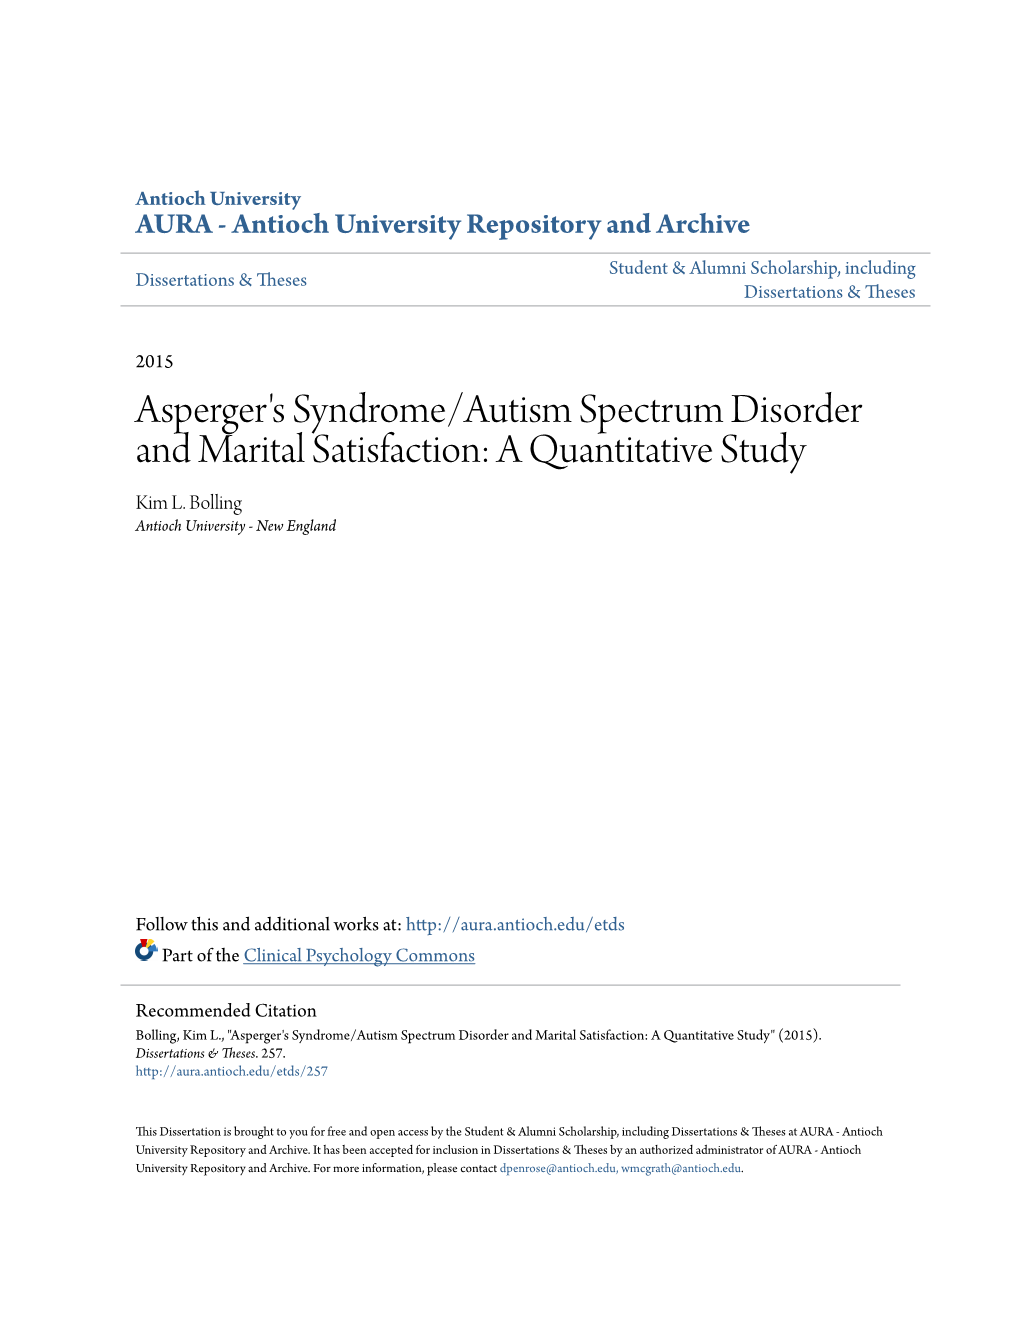 Asperger's Syndrome/Autism Spectrum Disorder and Marital Satisfaction: a Quantitative Study Kim L